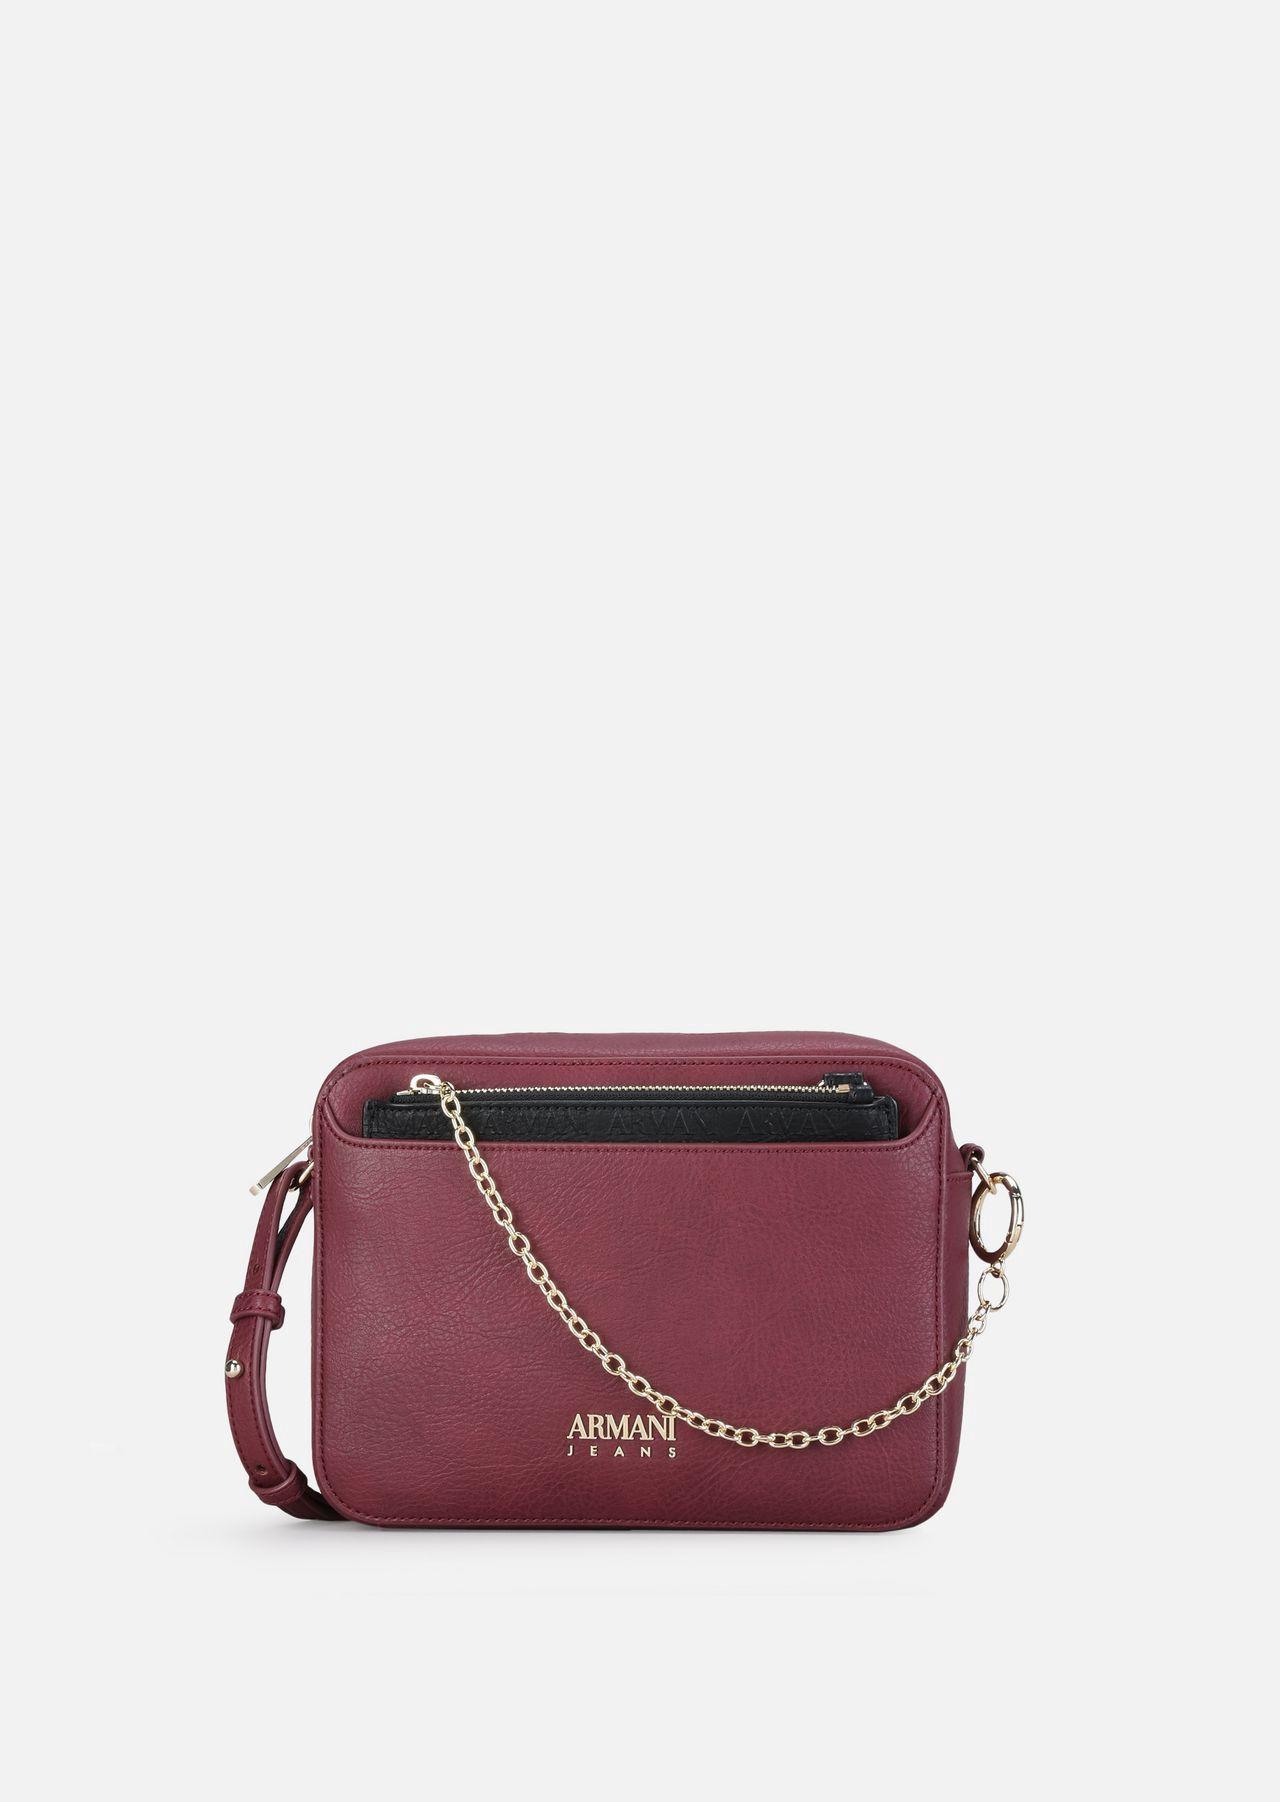 Armani Collezioni Shoulder Bag In Burgundy | ModeSens